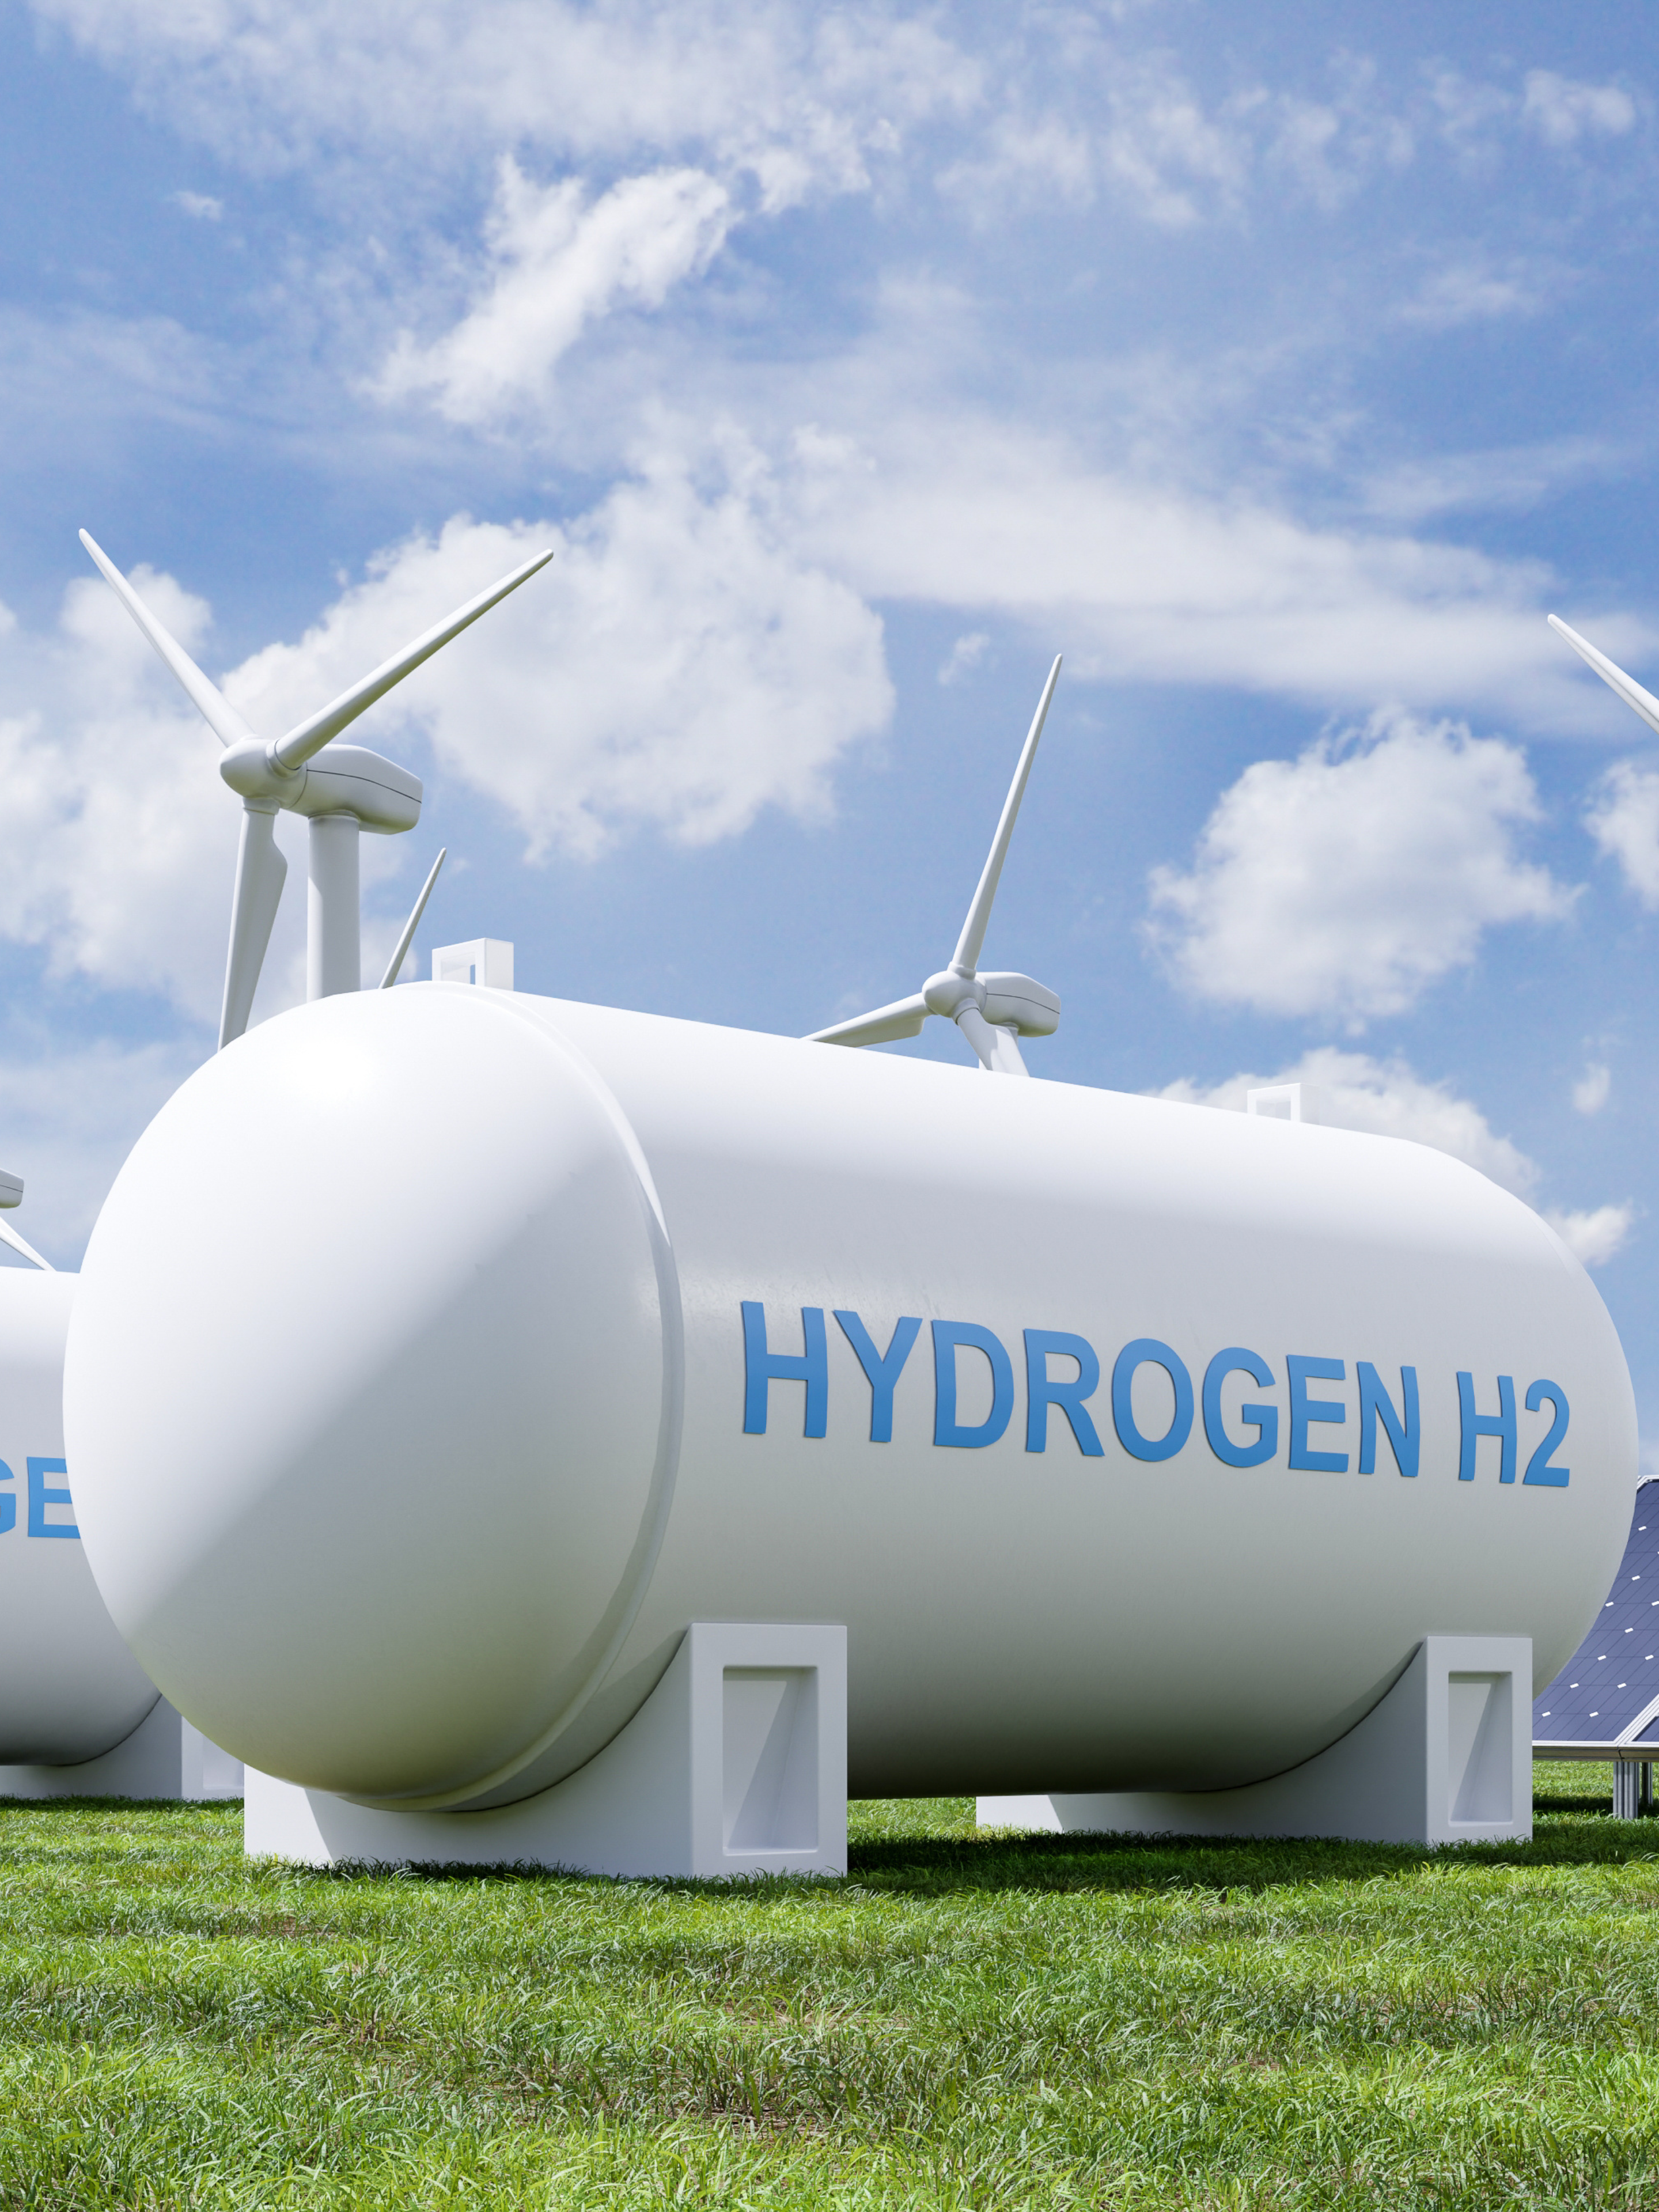 Hydrogen Hub